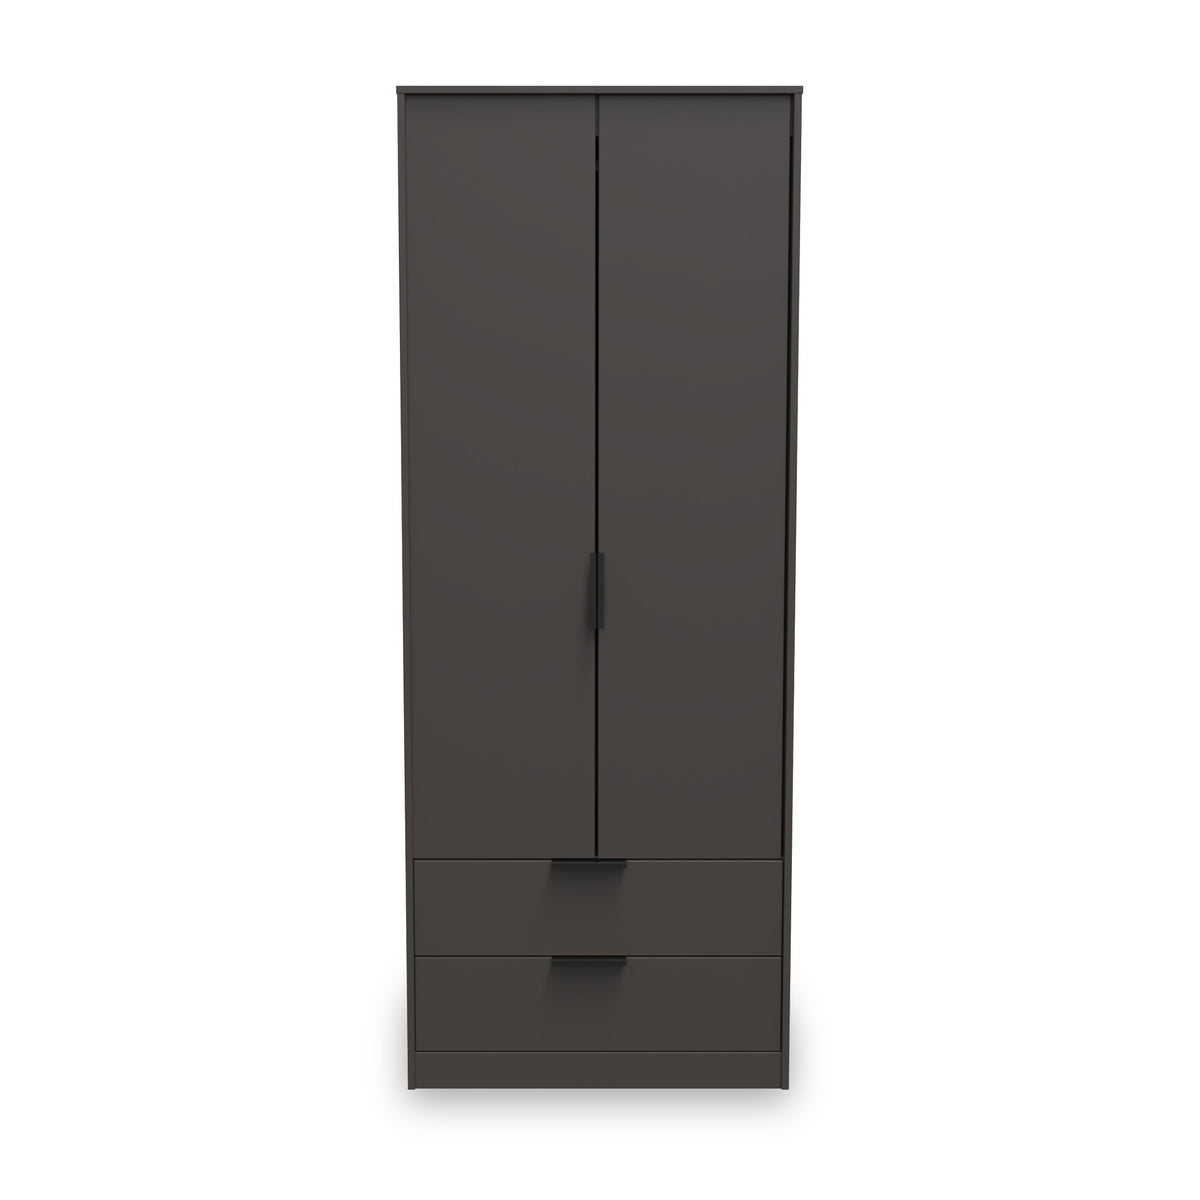 Moreno Graphite Grey 2 Door 2 Drawer Double Wardrobe from Roseland furniture